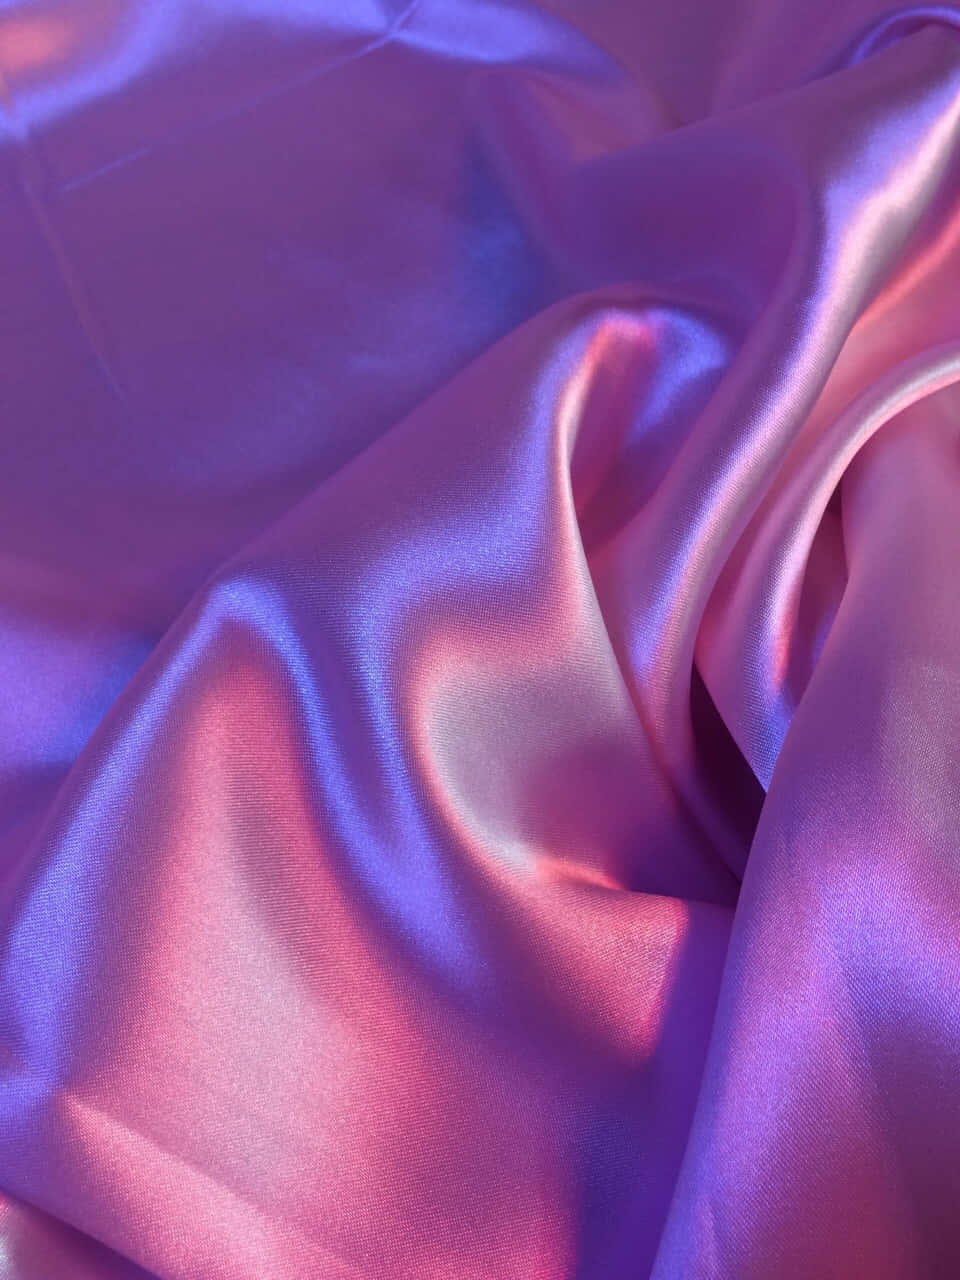 Pink Silk Aesthetic - Indulge Yourself in Sensual Luxury Wallpaper